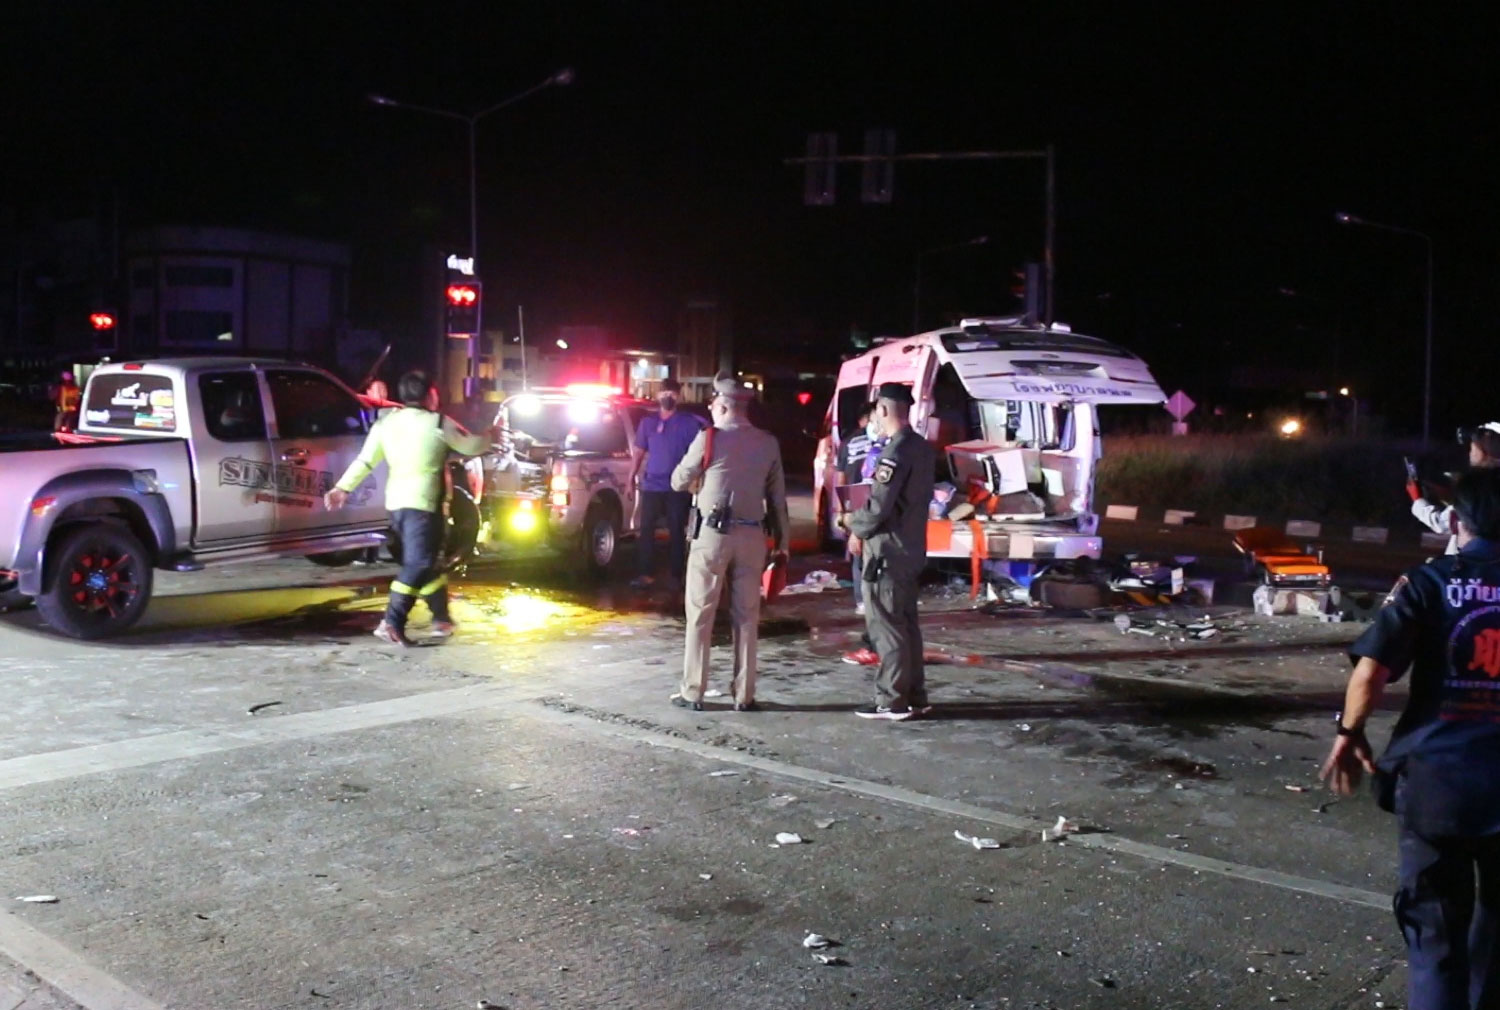 6 Injured After Pickup Crashes into Ambulance